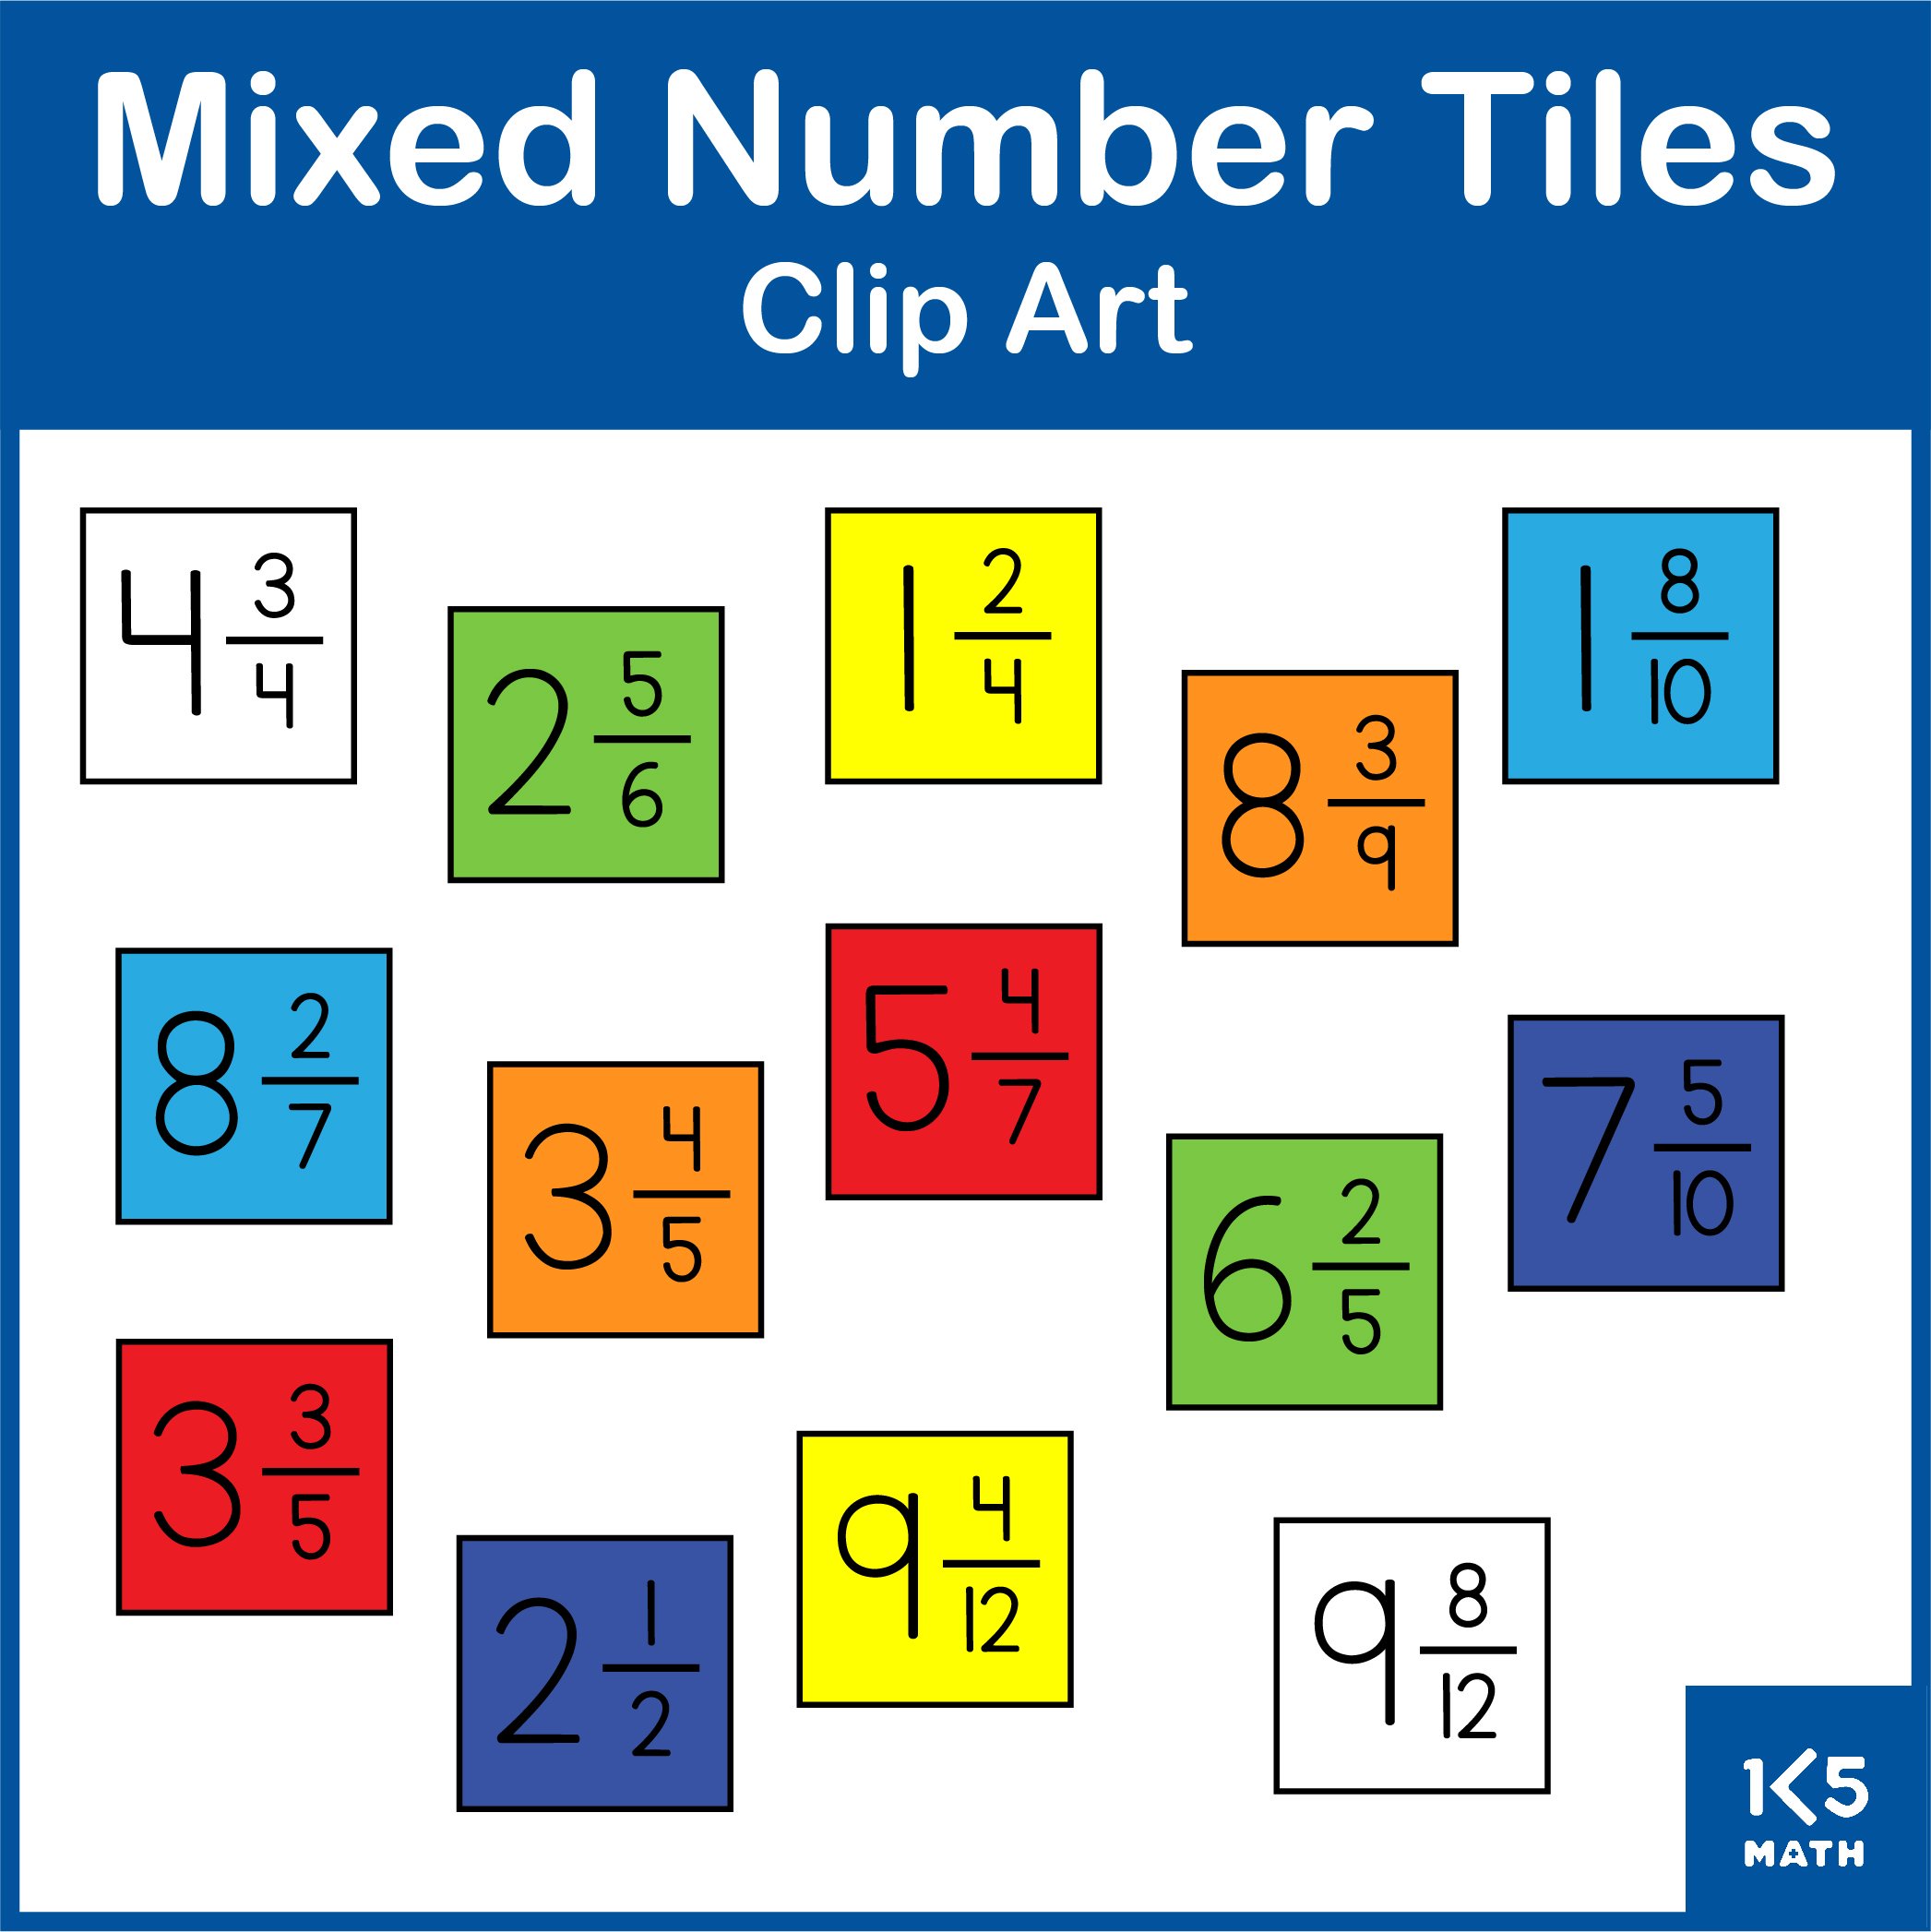 Mixed Number Tiles Clip Art